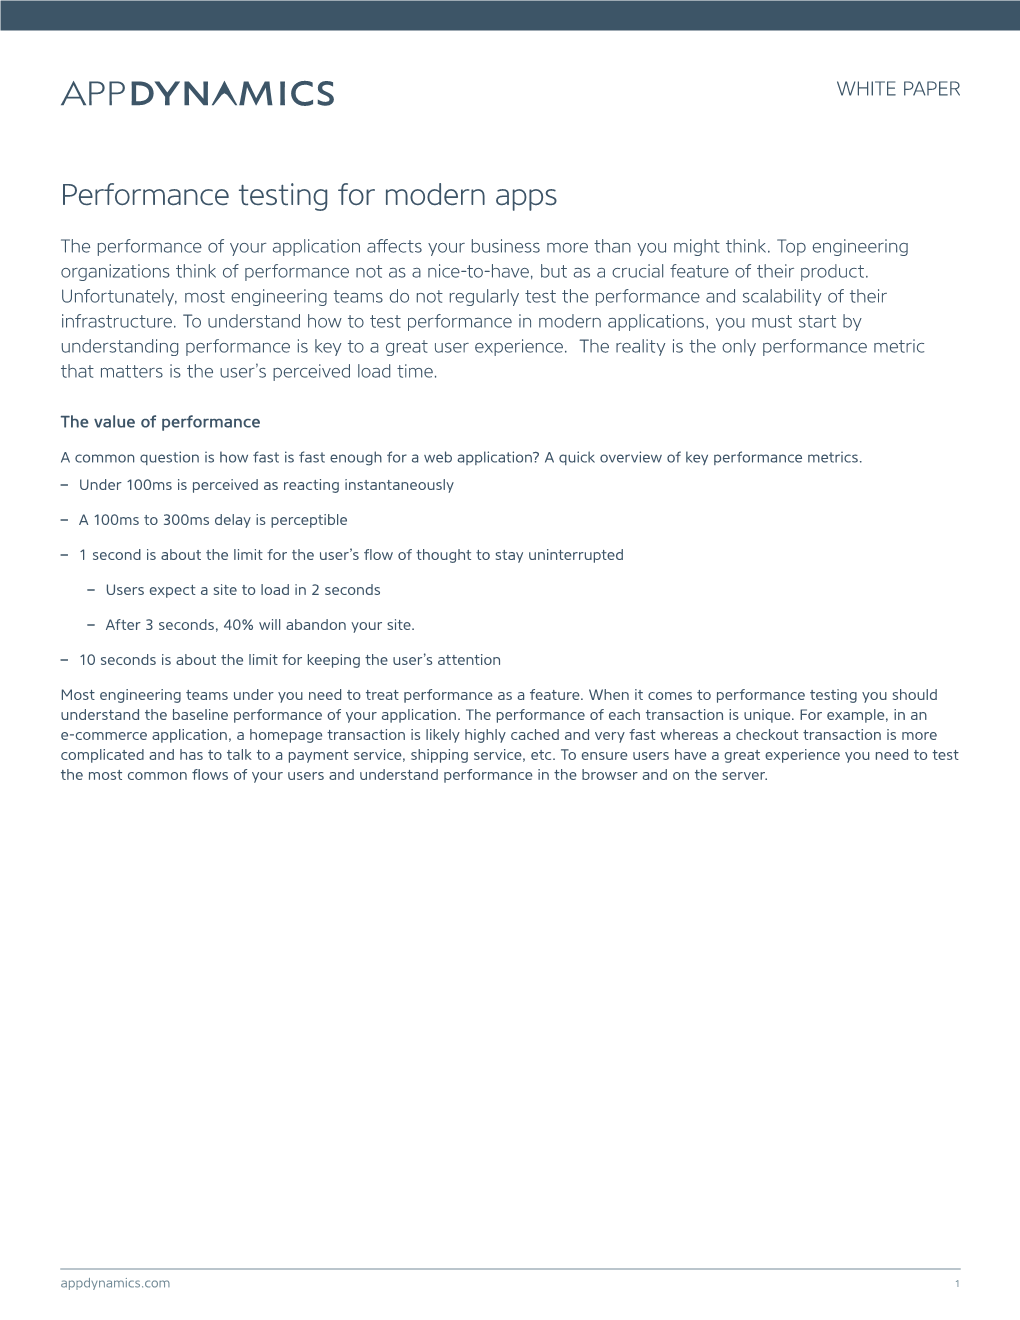 Performance Testing for Modern Apps